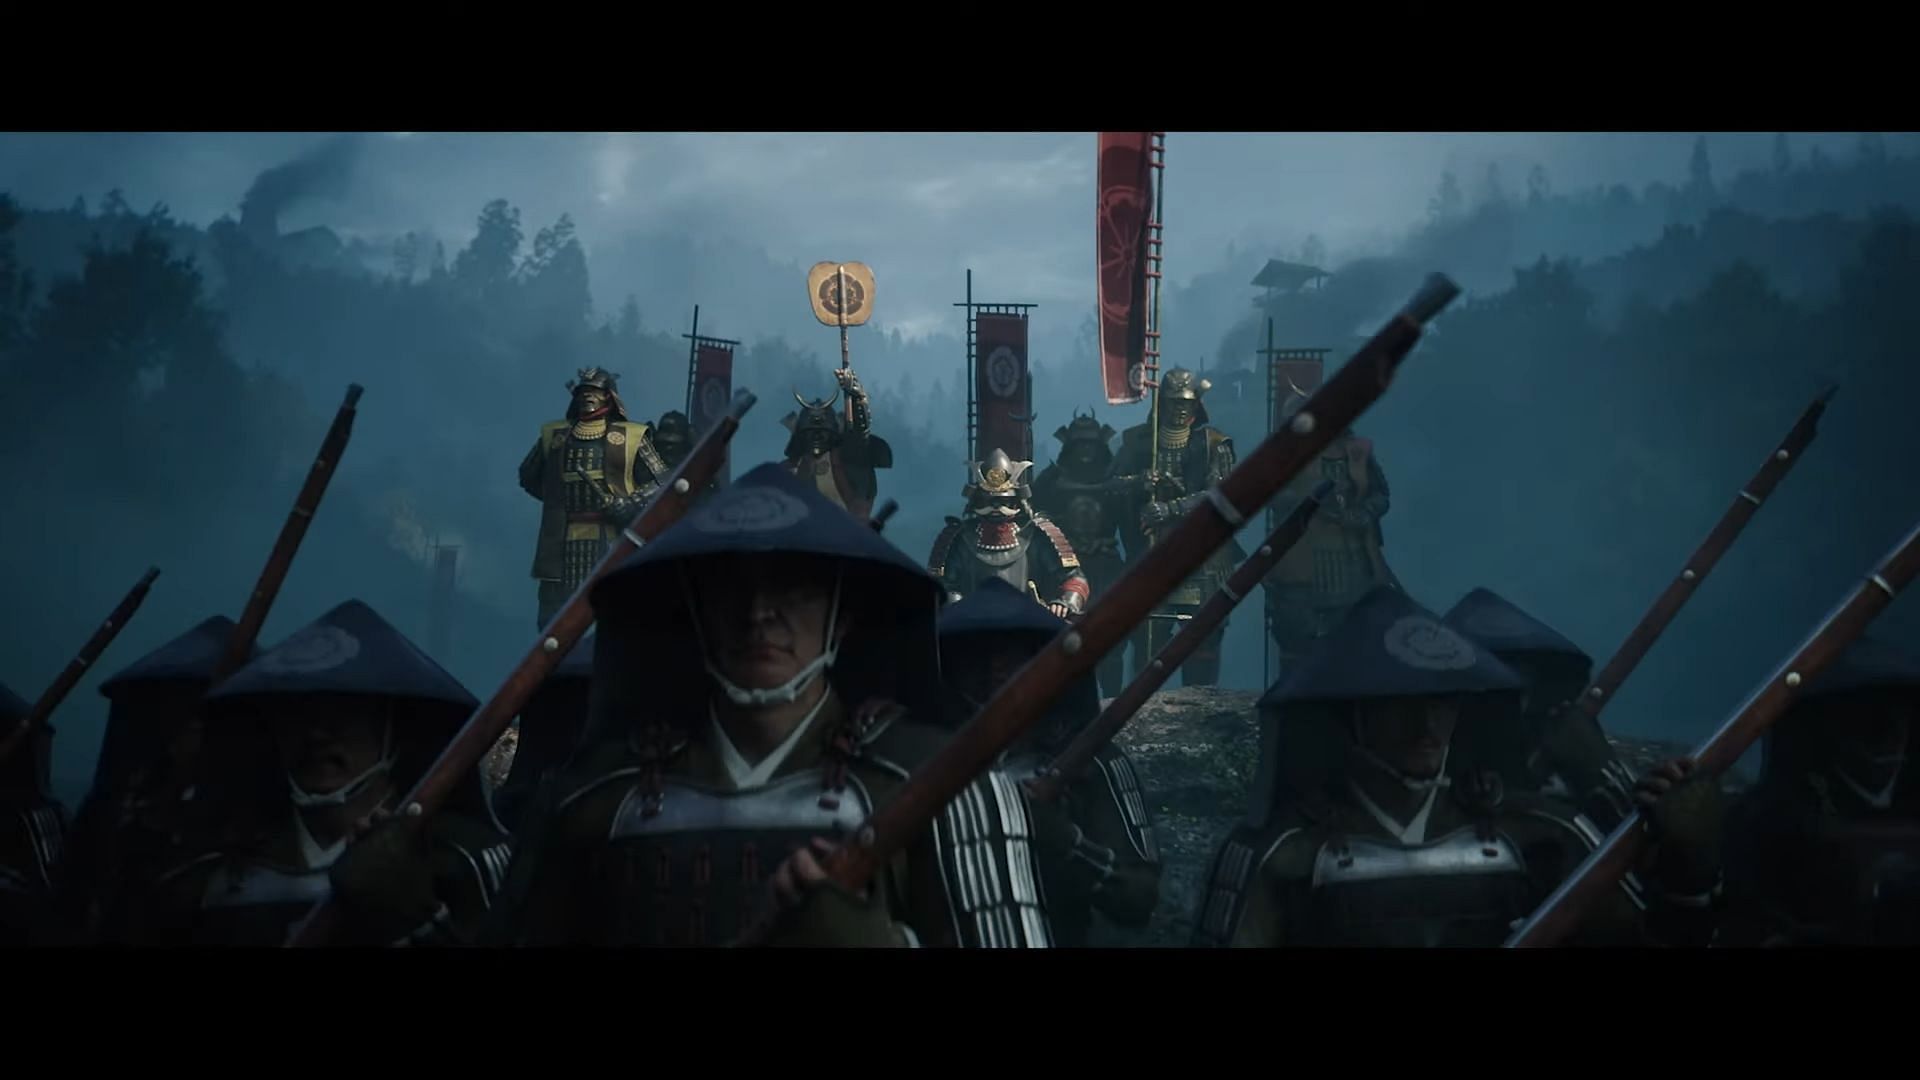 You will meet the iconic Great Unifier of Japan, Oda Nobunaga (Image via Ubisoft)